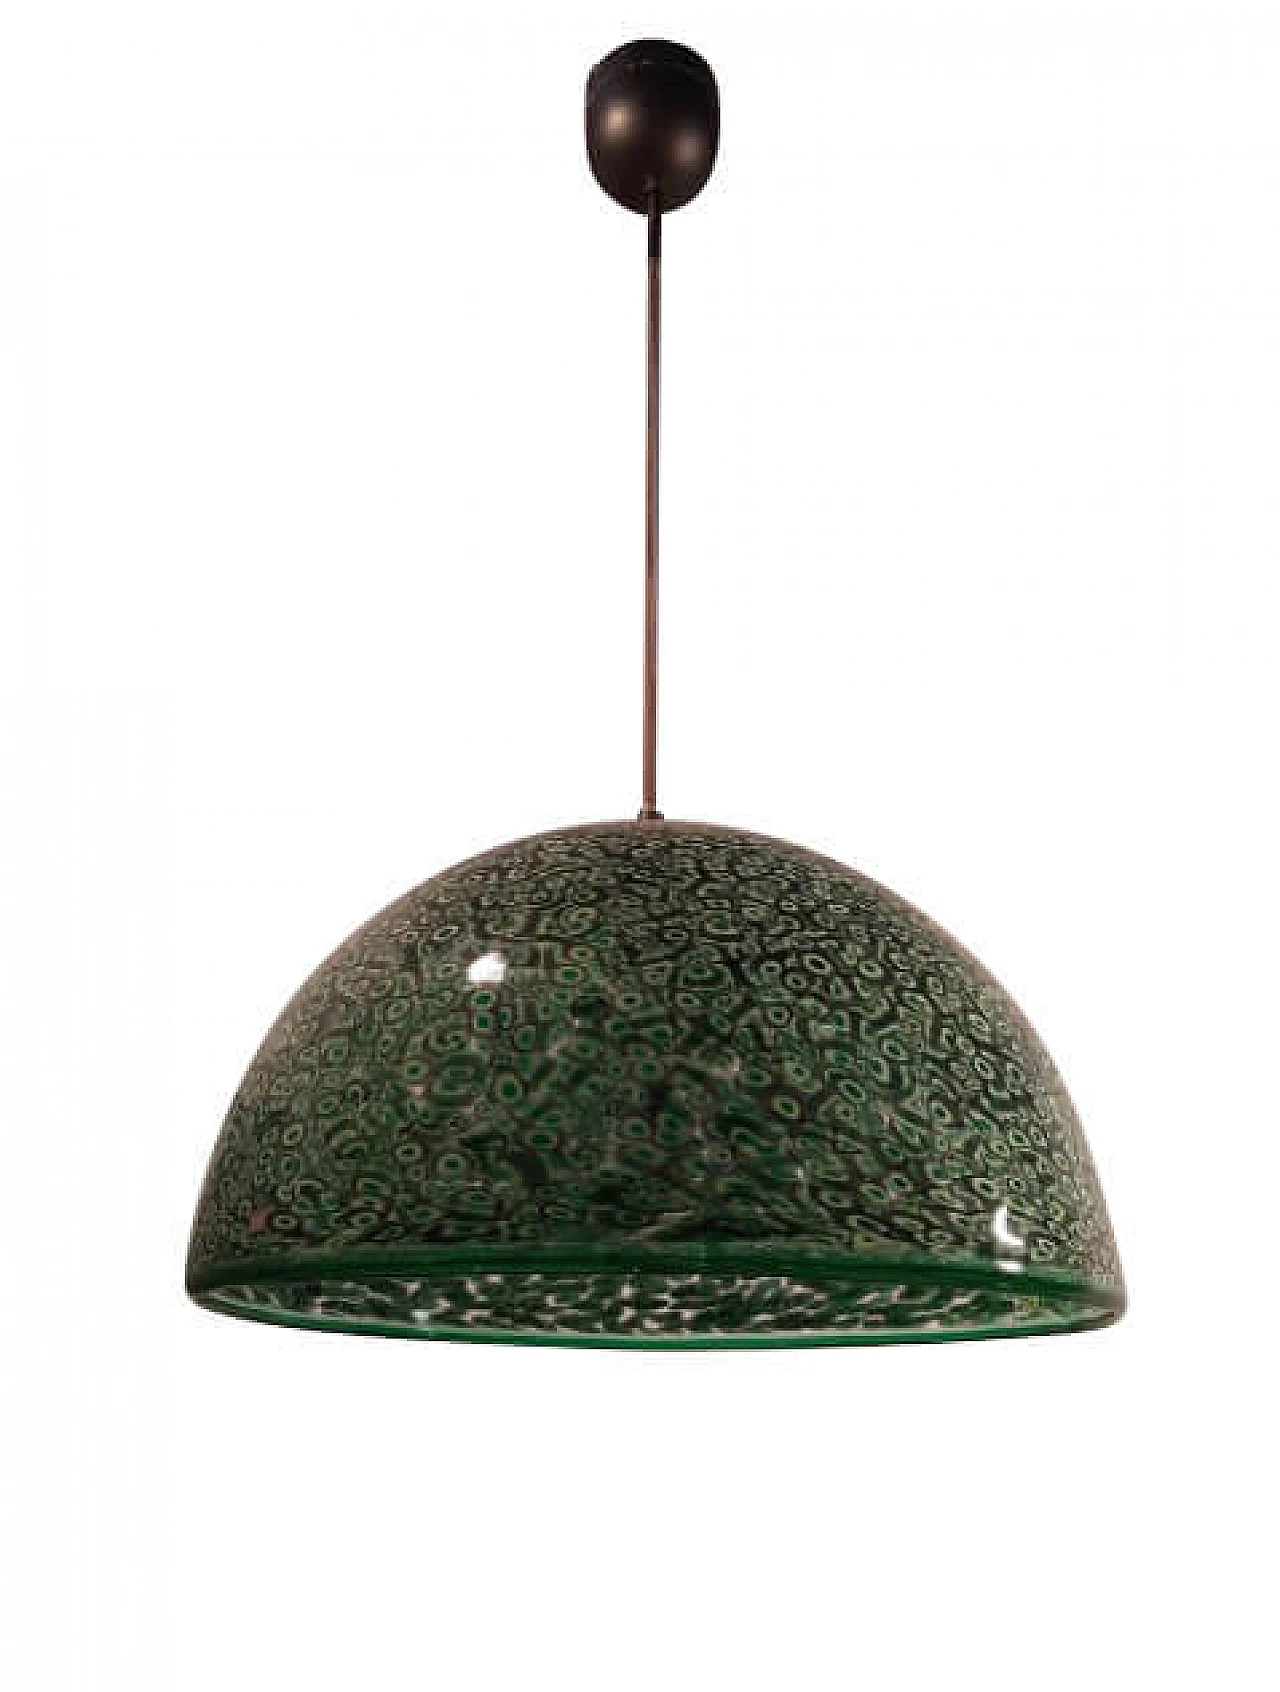 Neverrino pendant lamp in glass and iron by Gae Aulenti for Vistosi, 70s 1265480